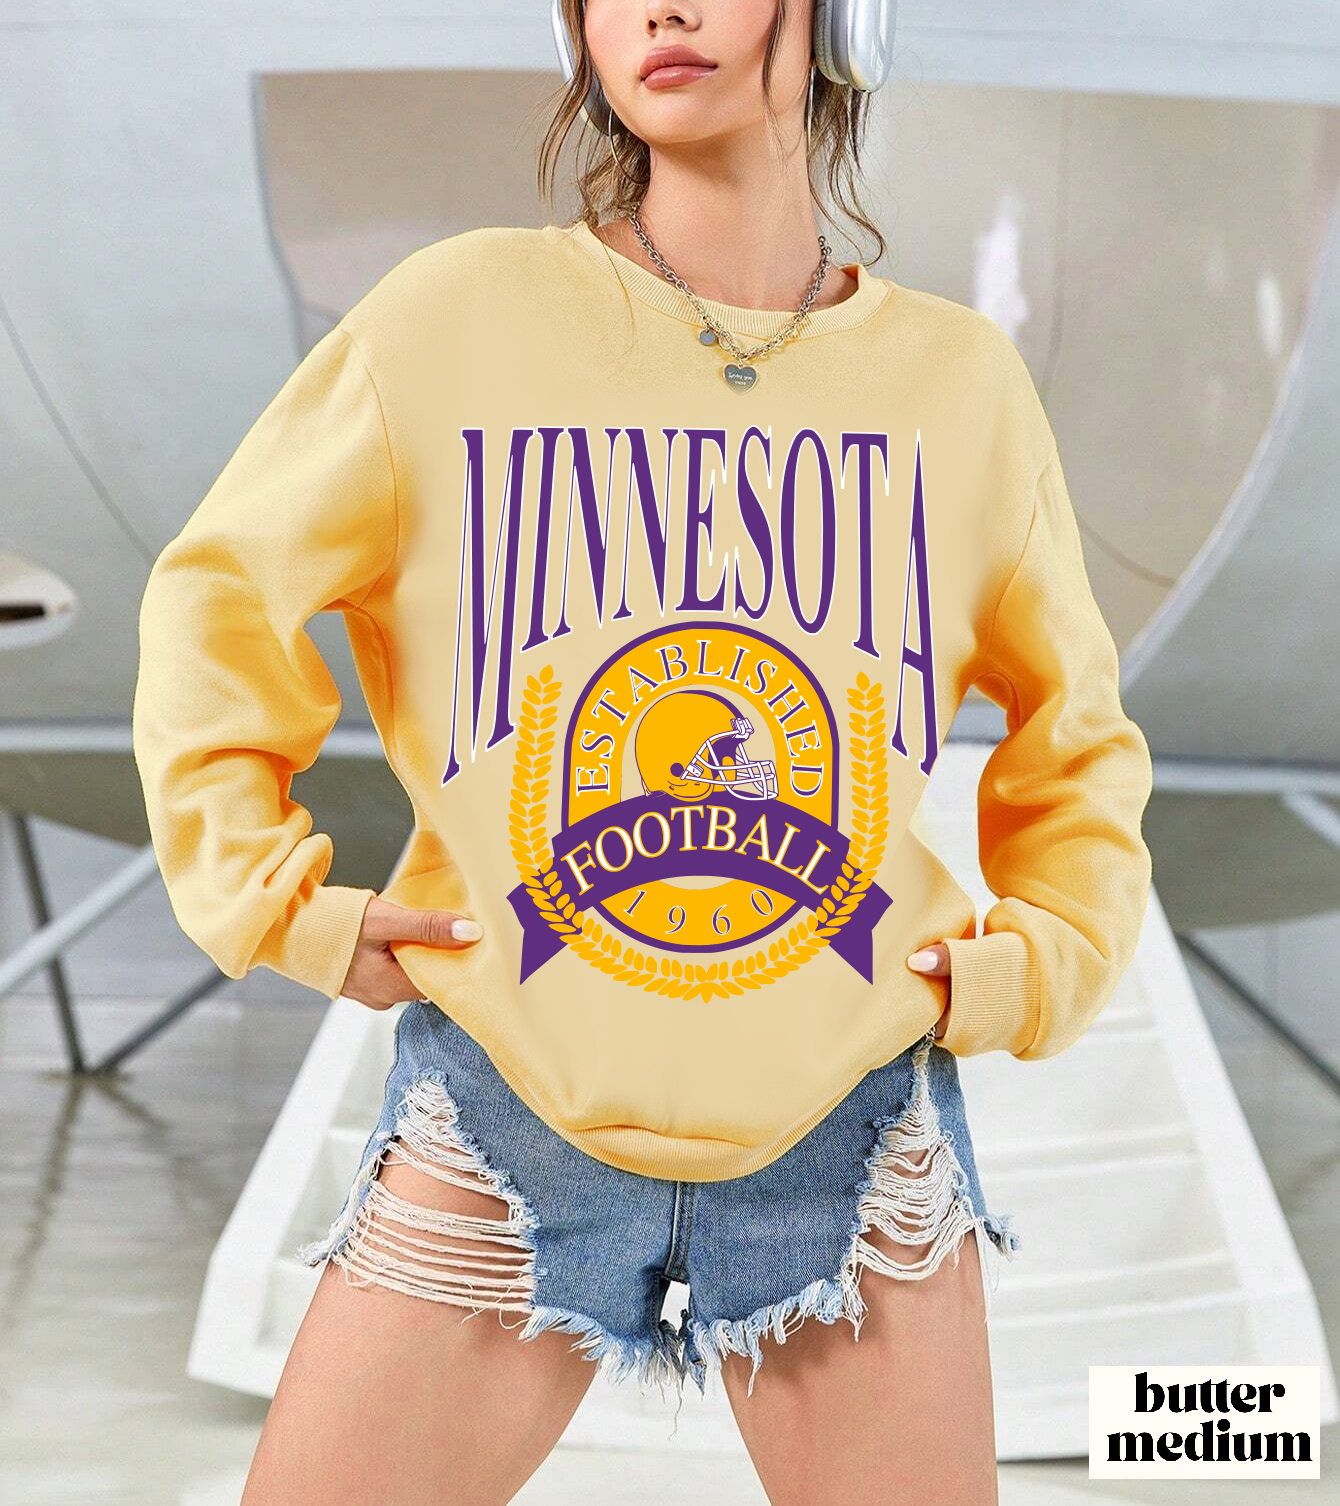 Comfort Colors - Purple Yellow Minnesota Vikings Football Crewneck - Pastel NFL Vintage Sweatshirt Men & Women - Design 1